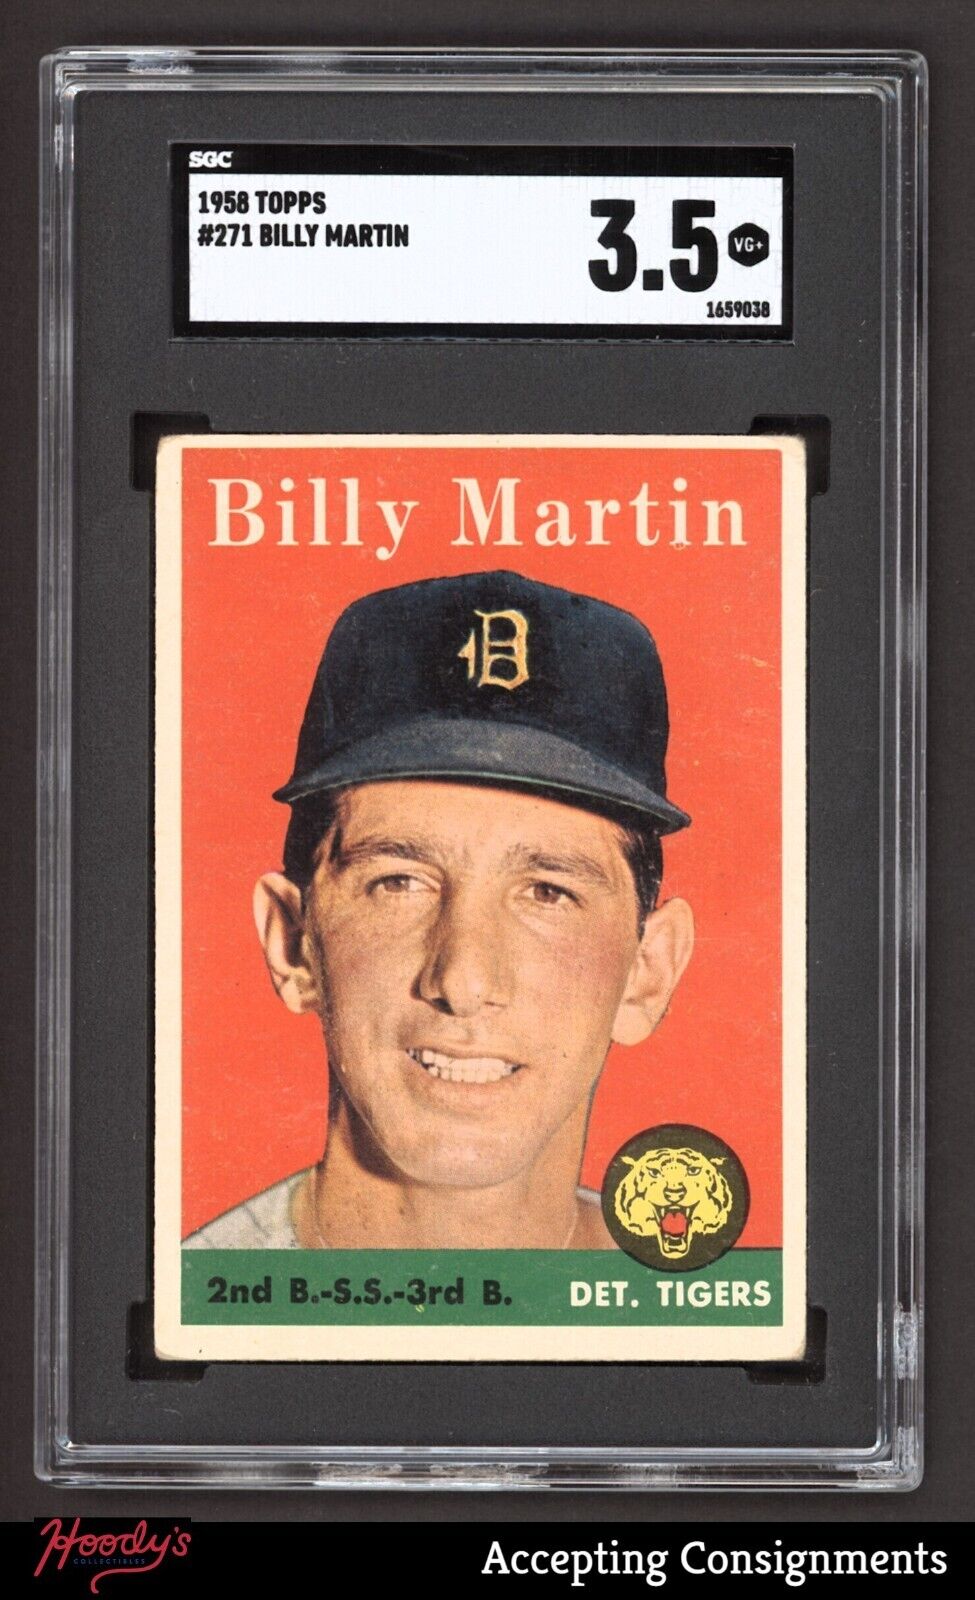 1958 Topps #271 Billy Martin SGC 3.5 VG+ TIGERS